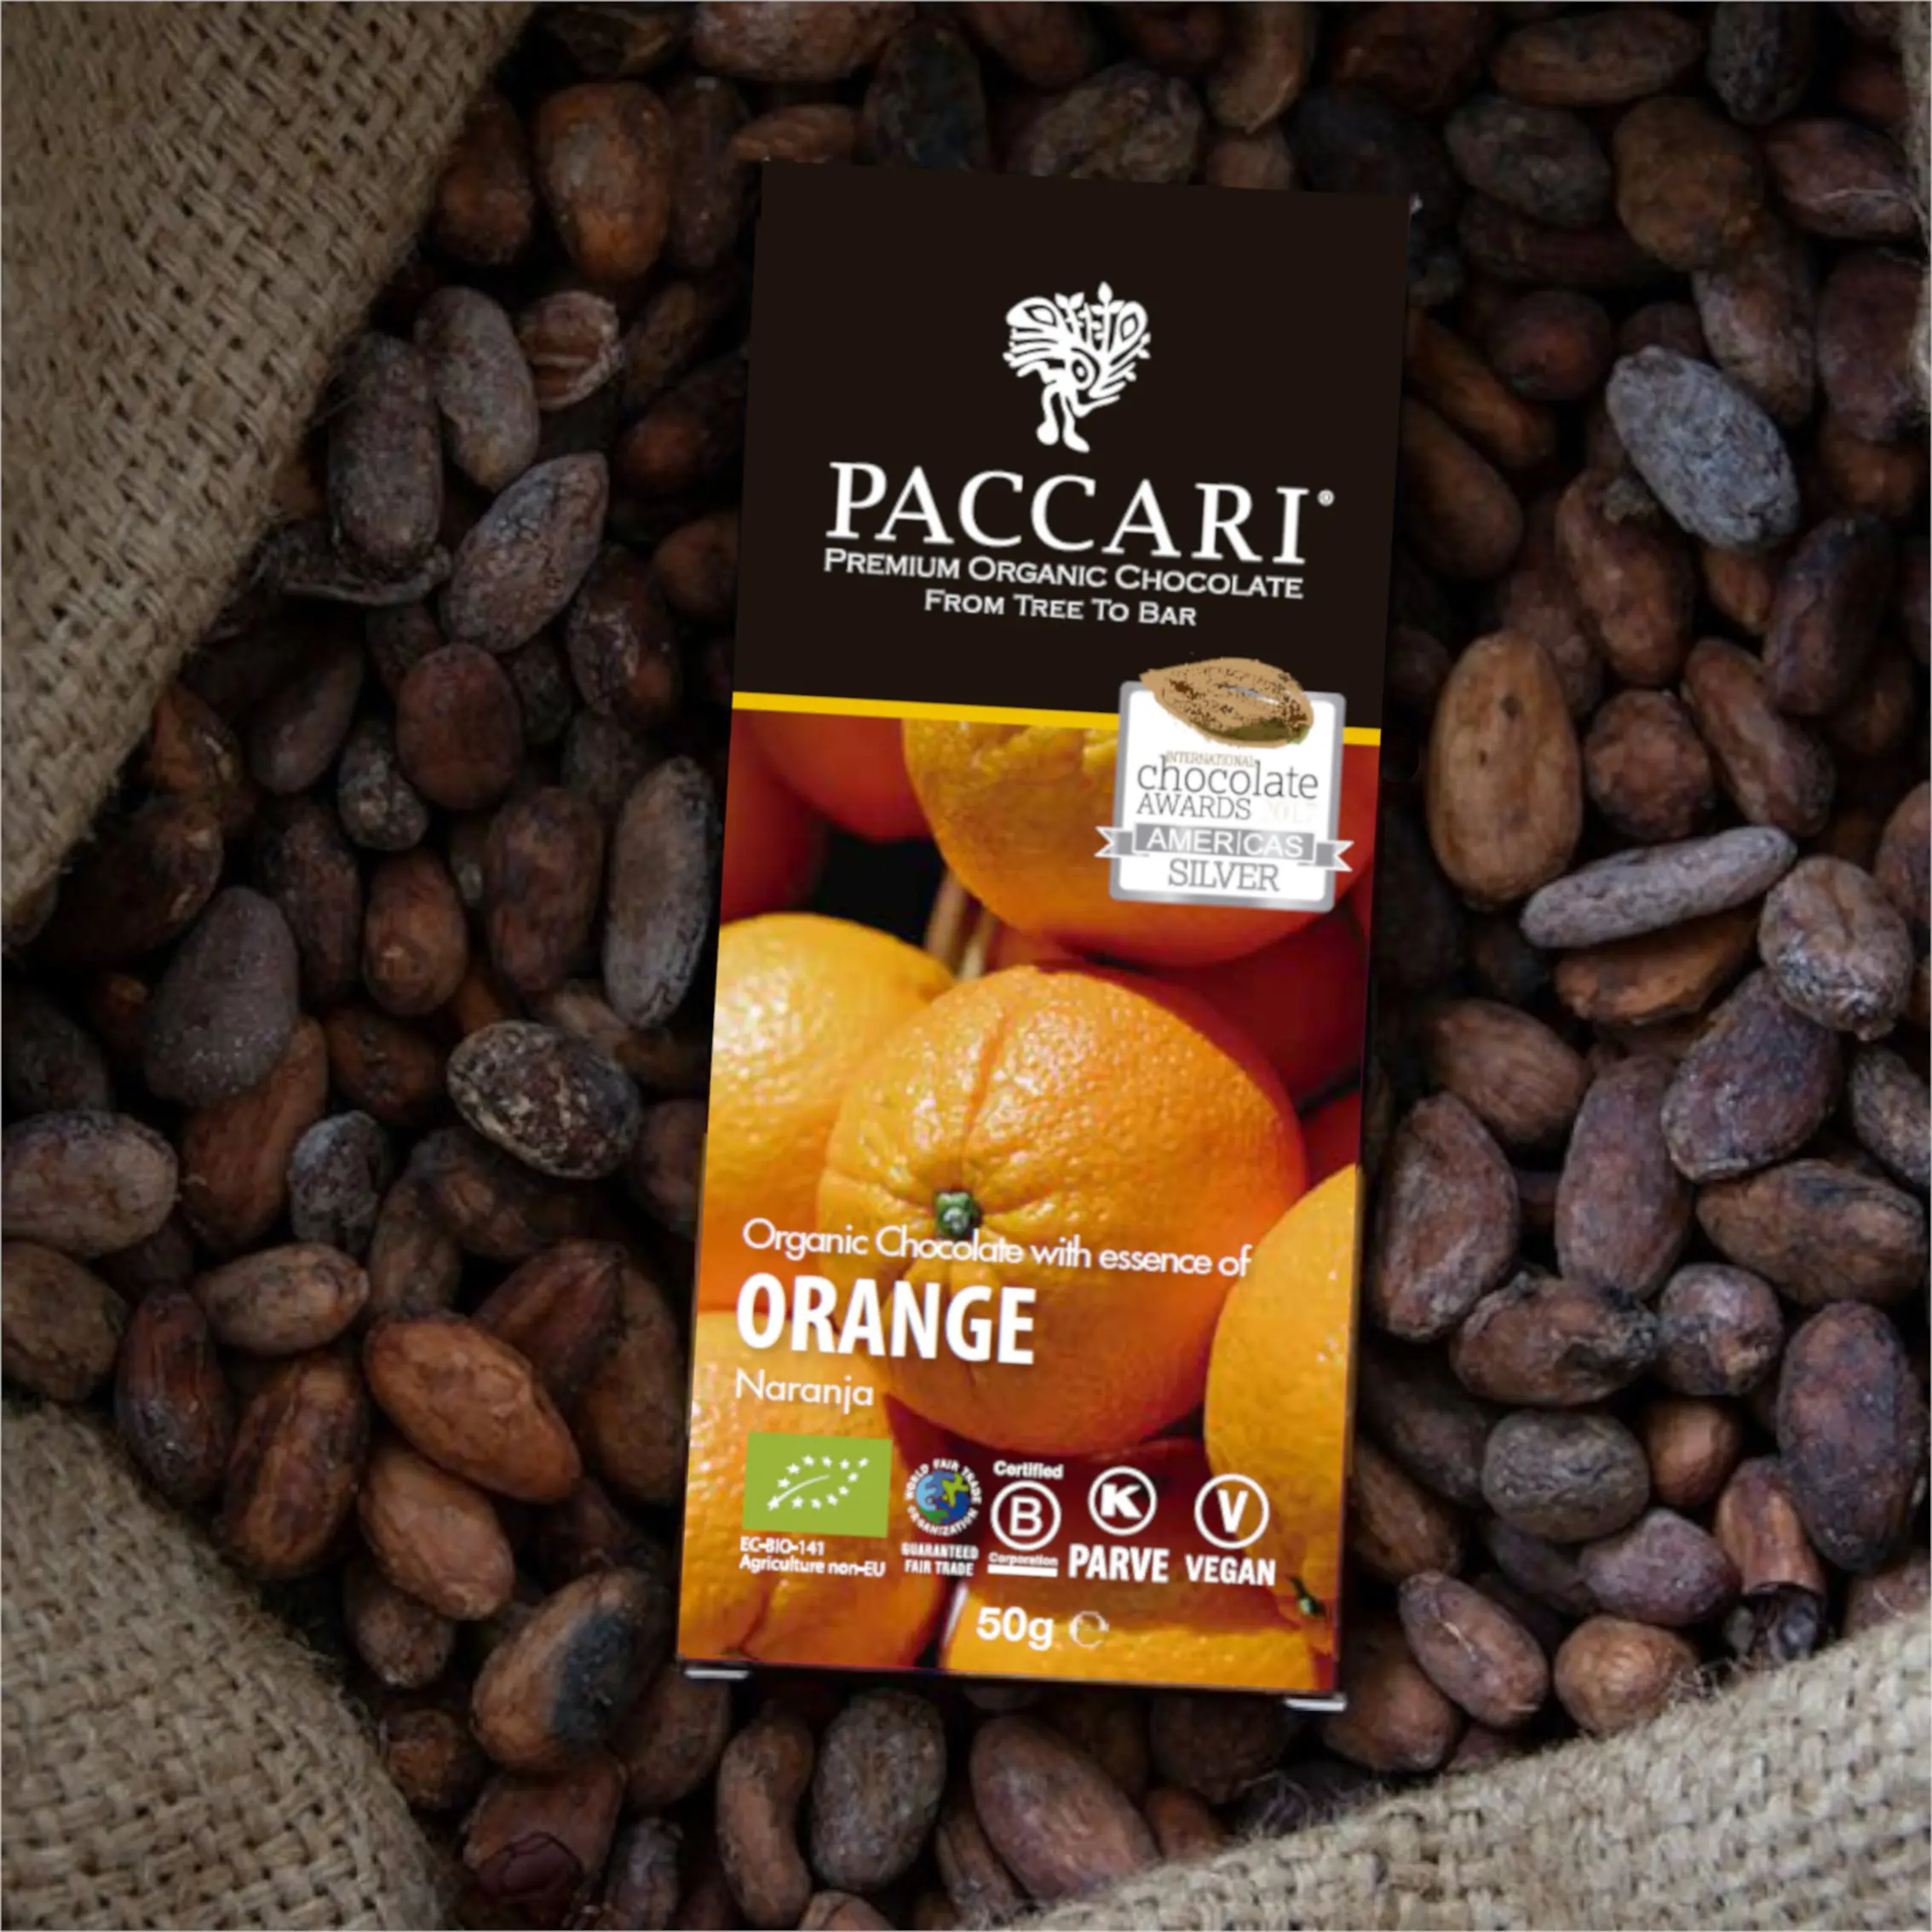 Aus Pacari Chocolate wurde Paccari Schokolade aus Ecuador